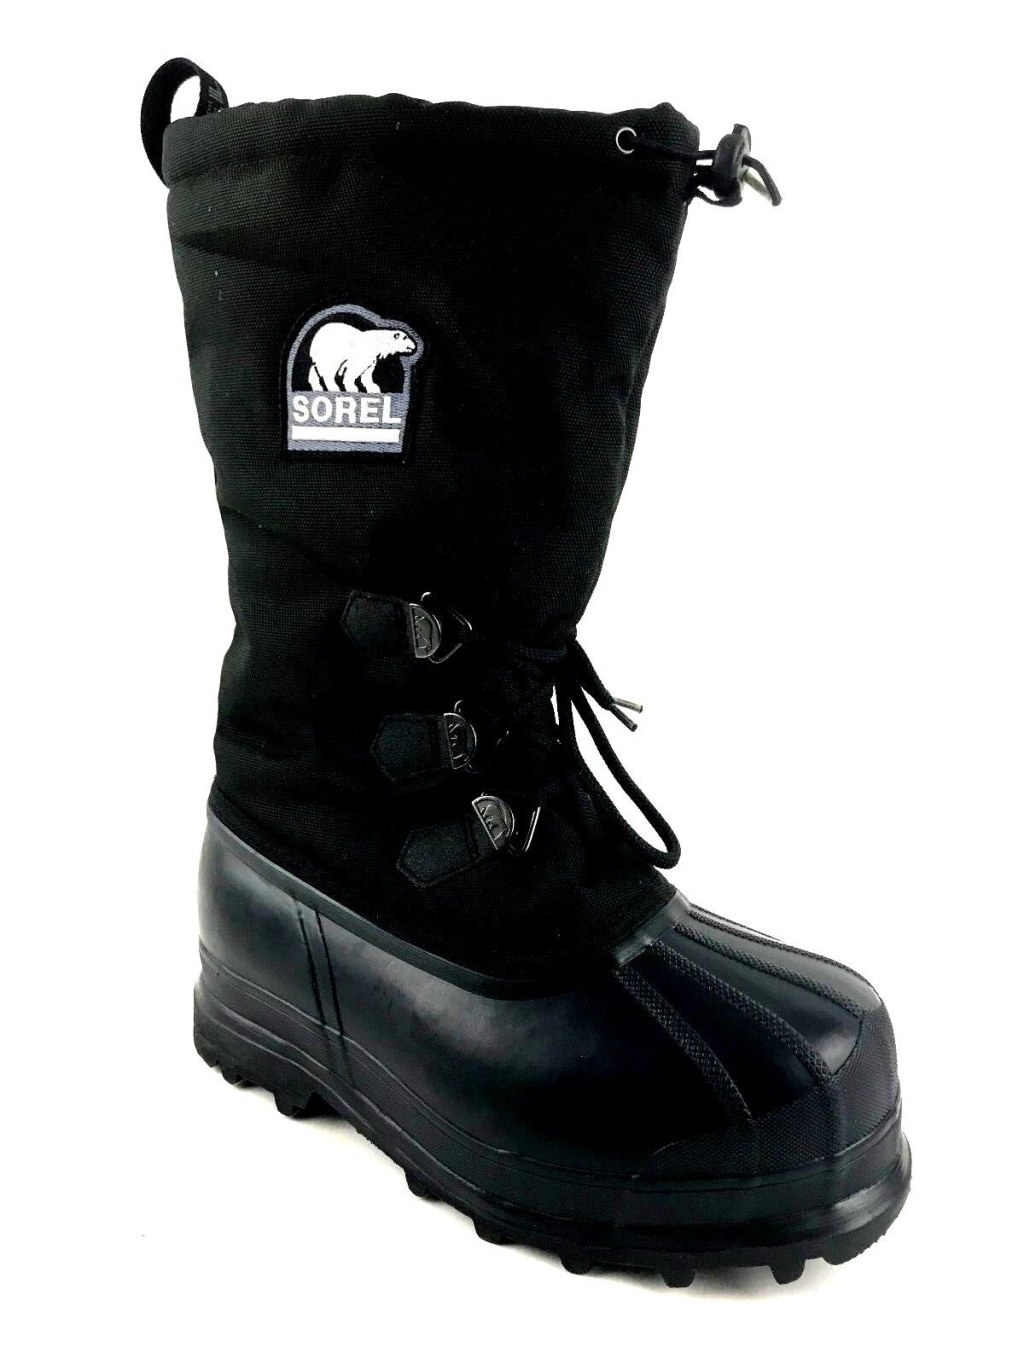 Picture of: Sorel Glacier NM- Extreme Snow Boots Black Boots Size US